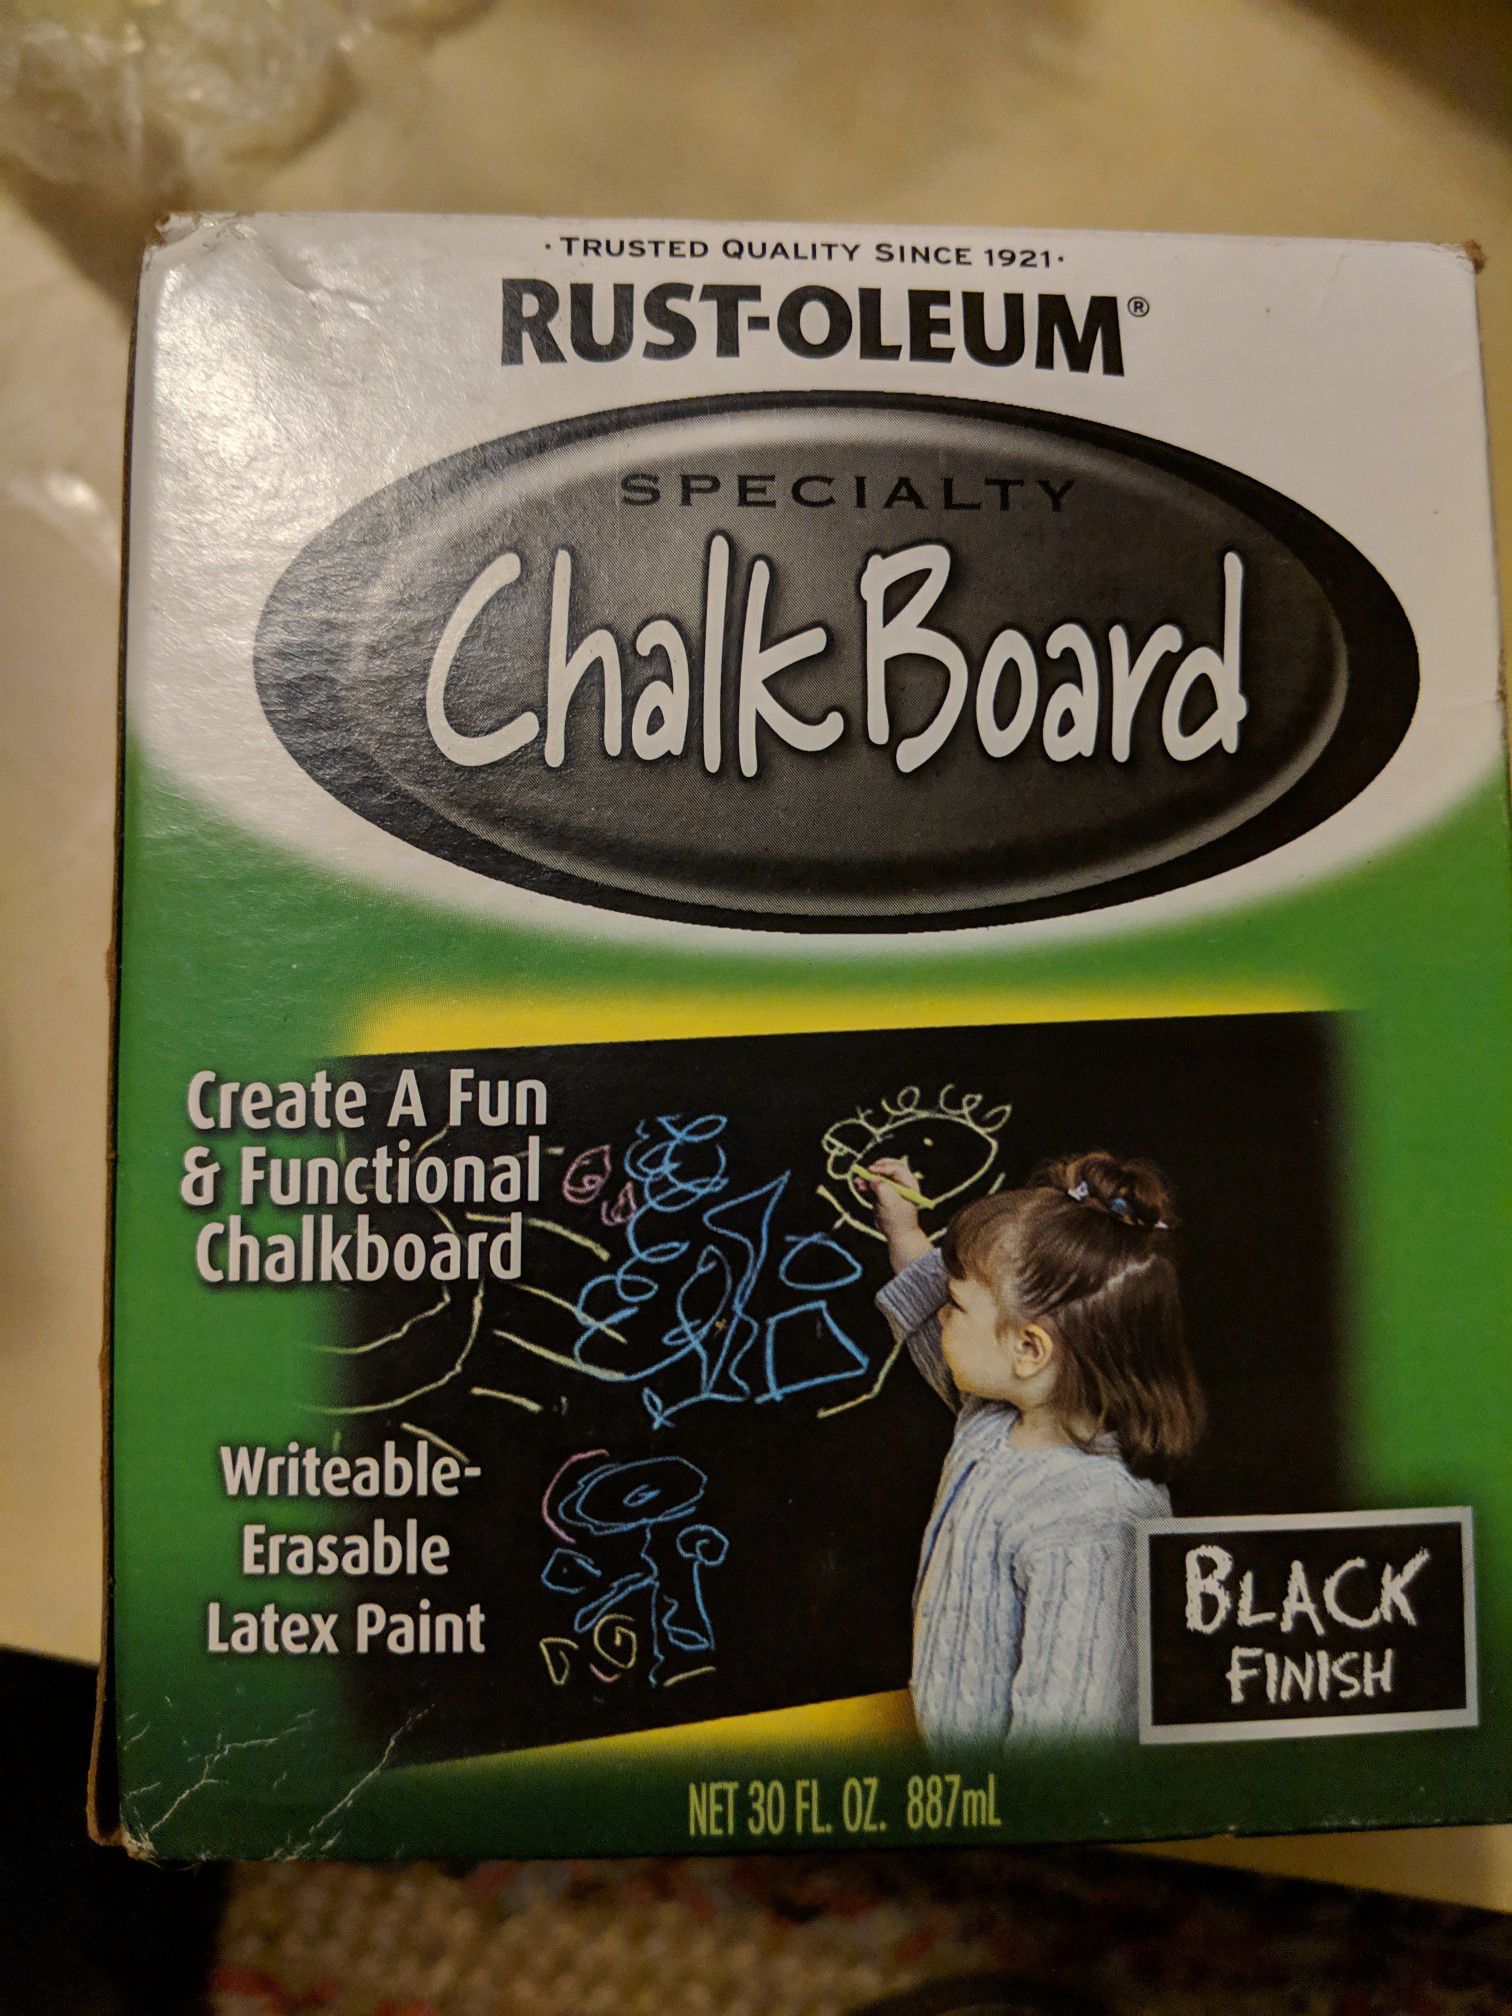 Rust-Oleum chalk board paint